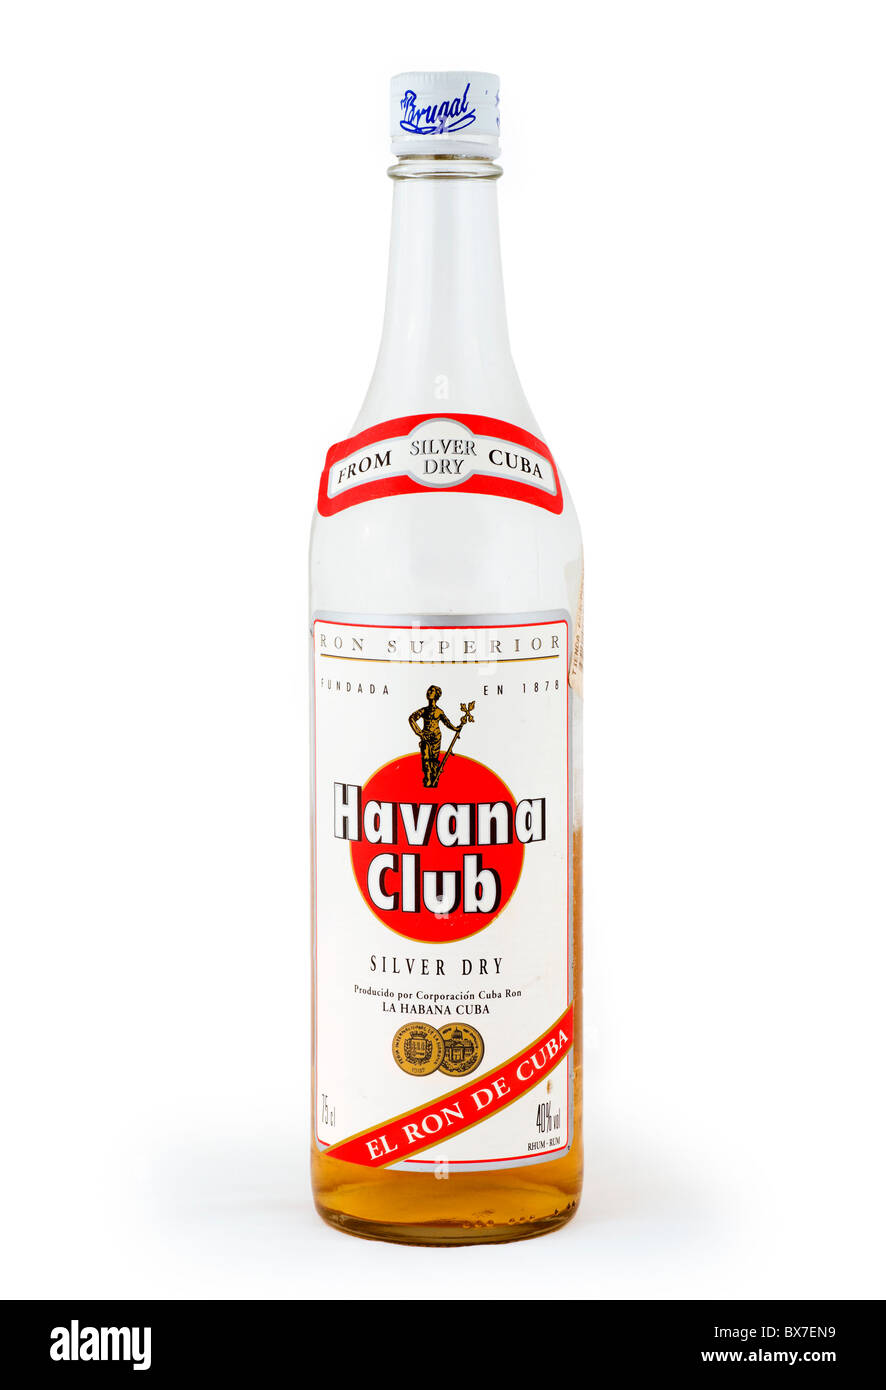 Bottle of Havana Club cuban rum Stock Photo